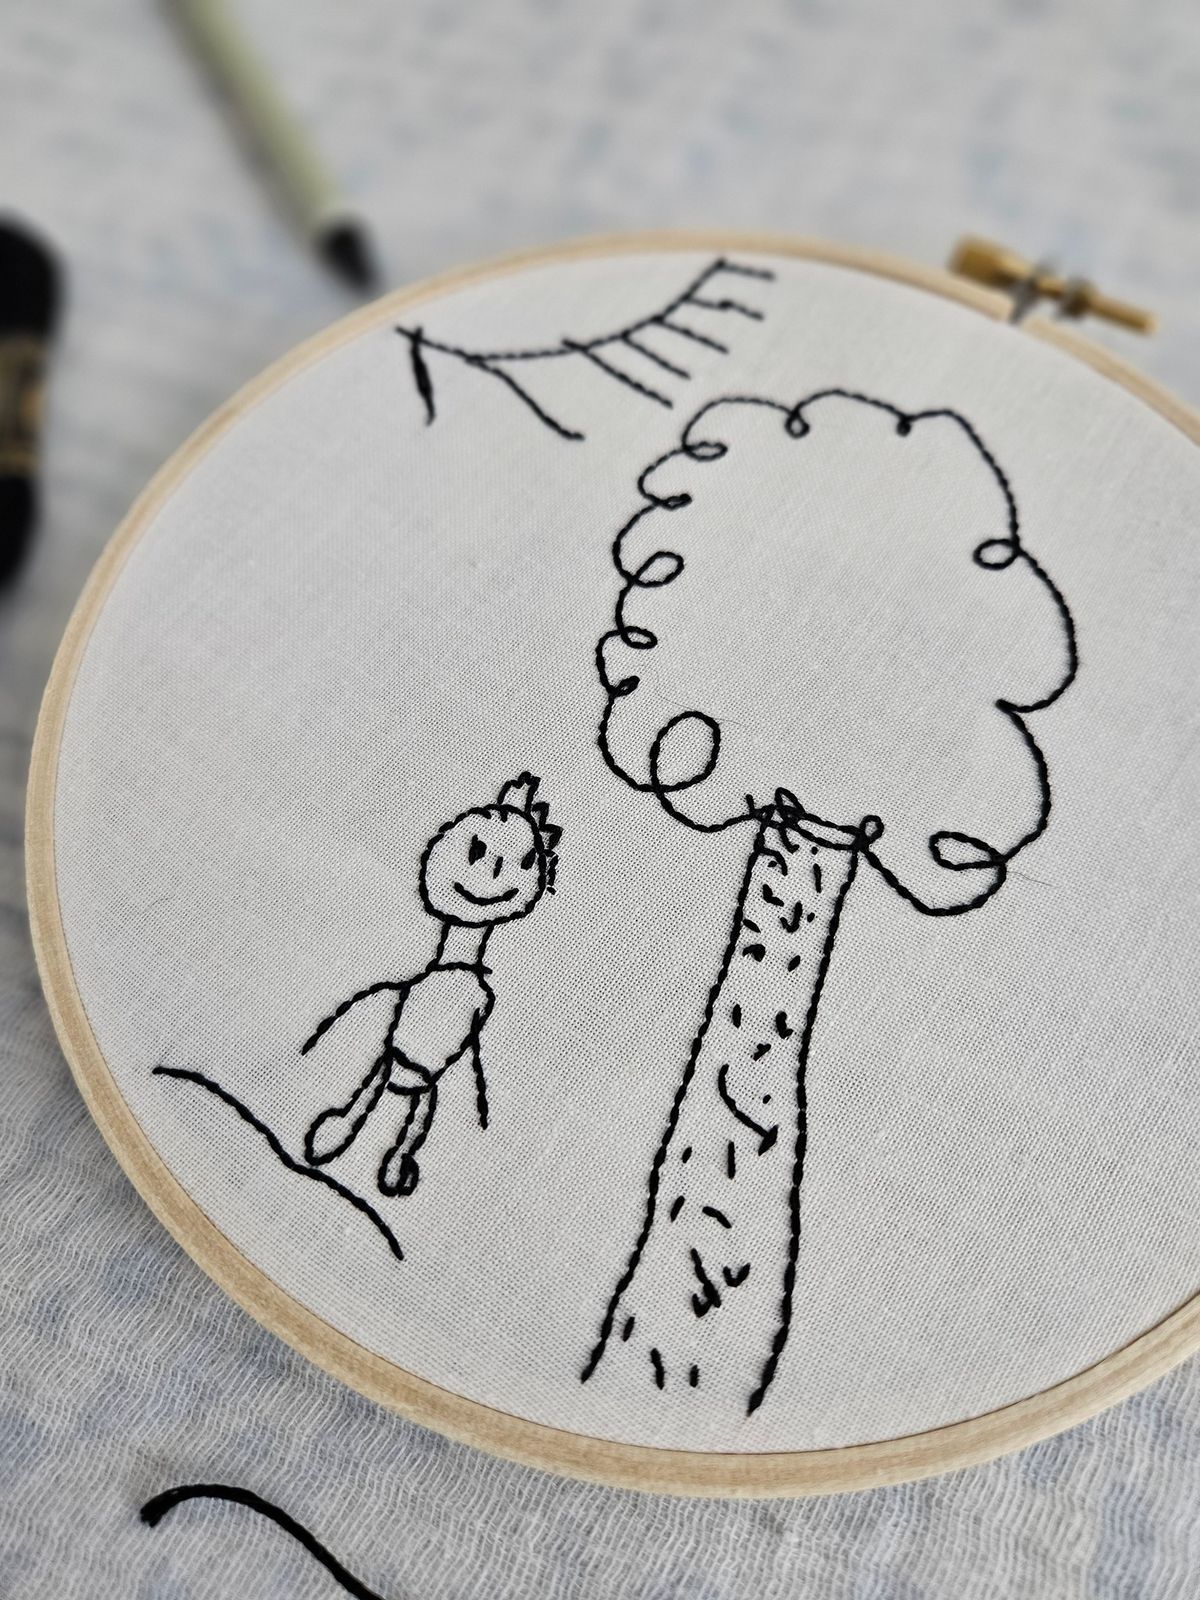 Embroidery Workshop - embroider your children's artwork